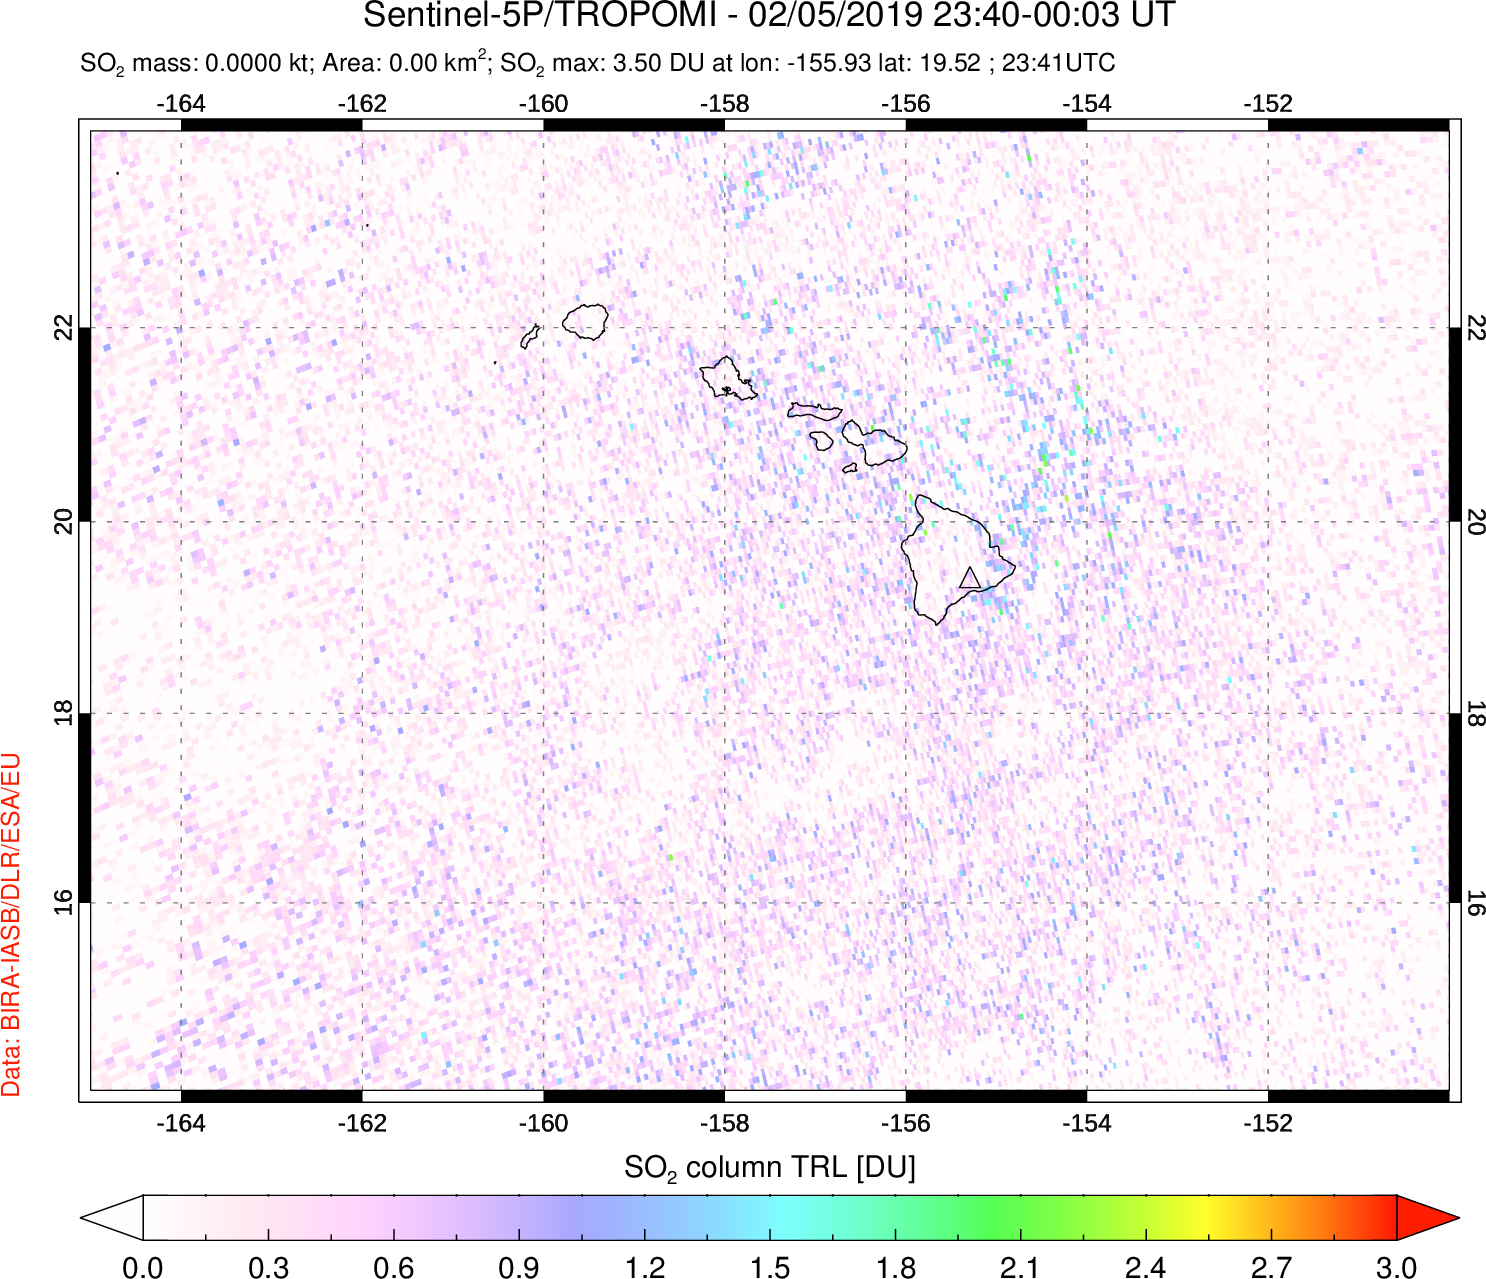 A sulfur dioxide image over Hawaii, USA on Feb 05, 2019.